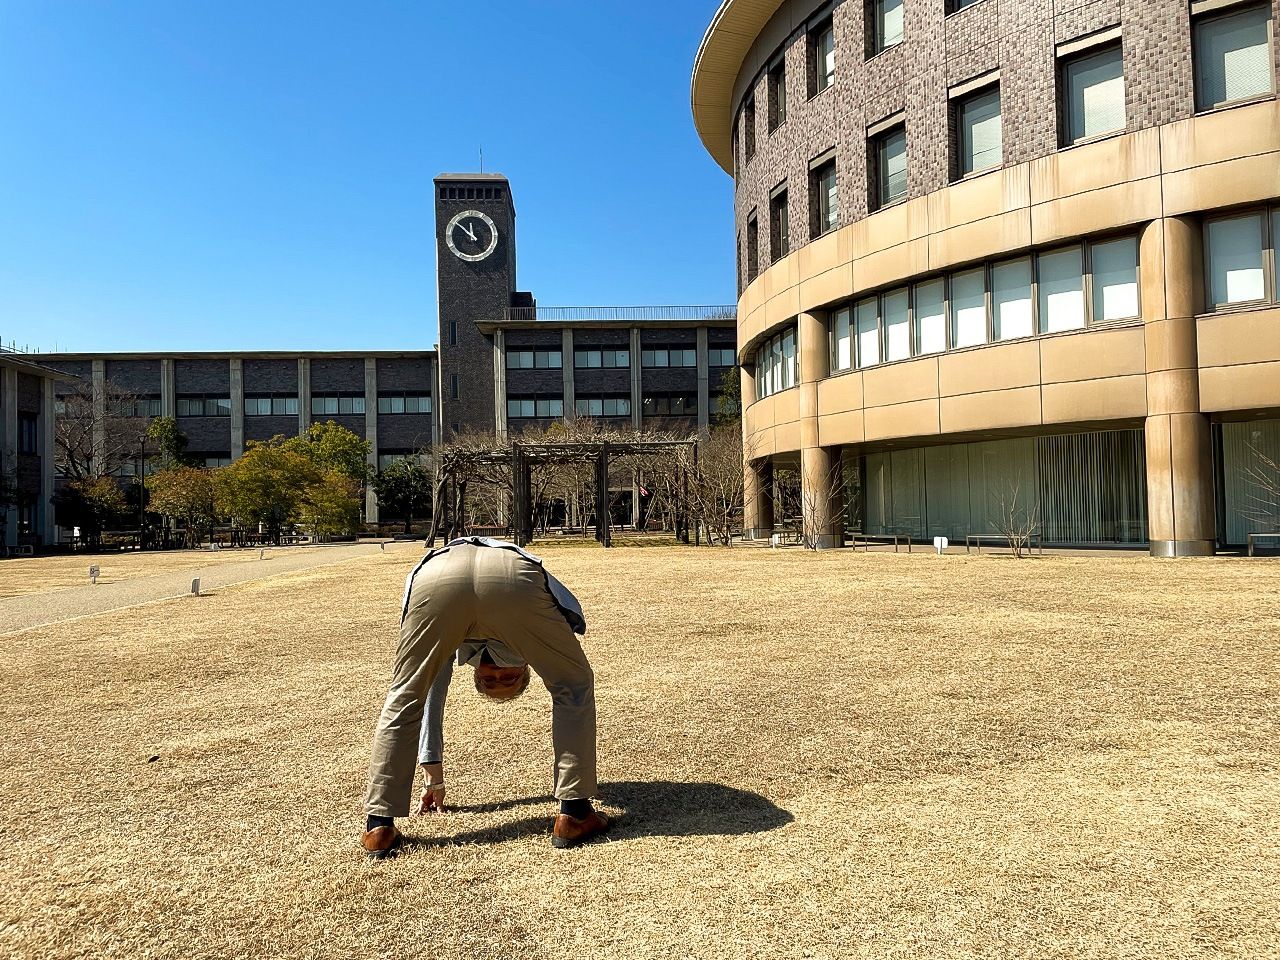 Higashiyama demonstrating between-the-legs viewing. (© Power News)